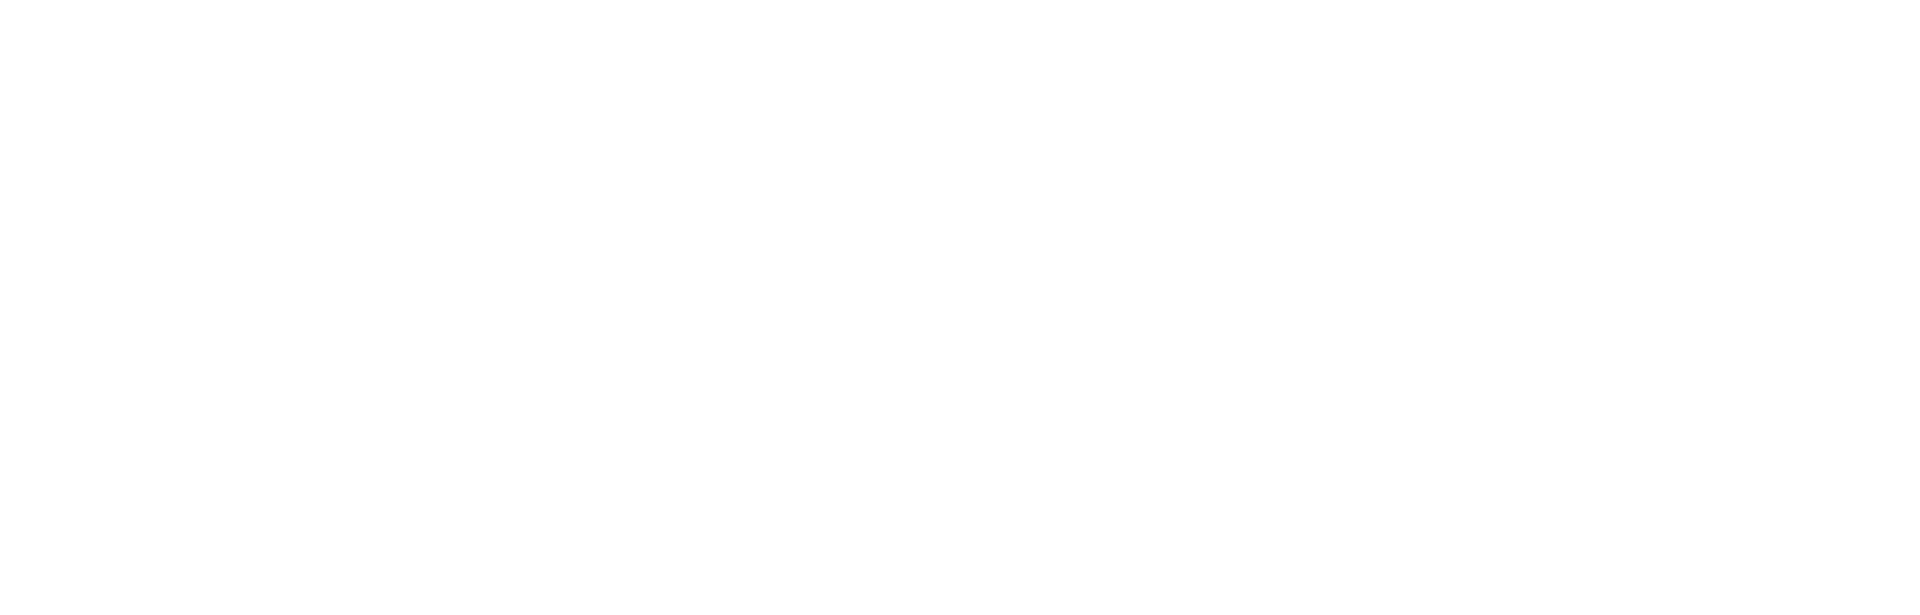 vitaldoc logo weiss